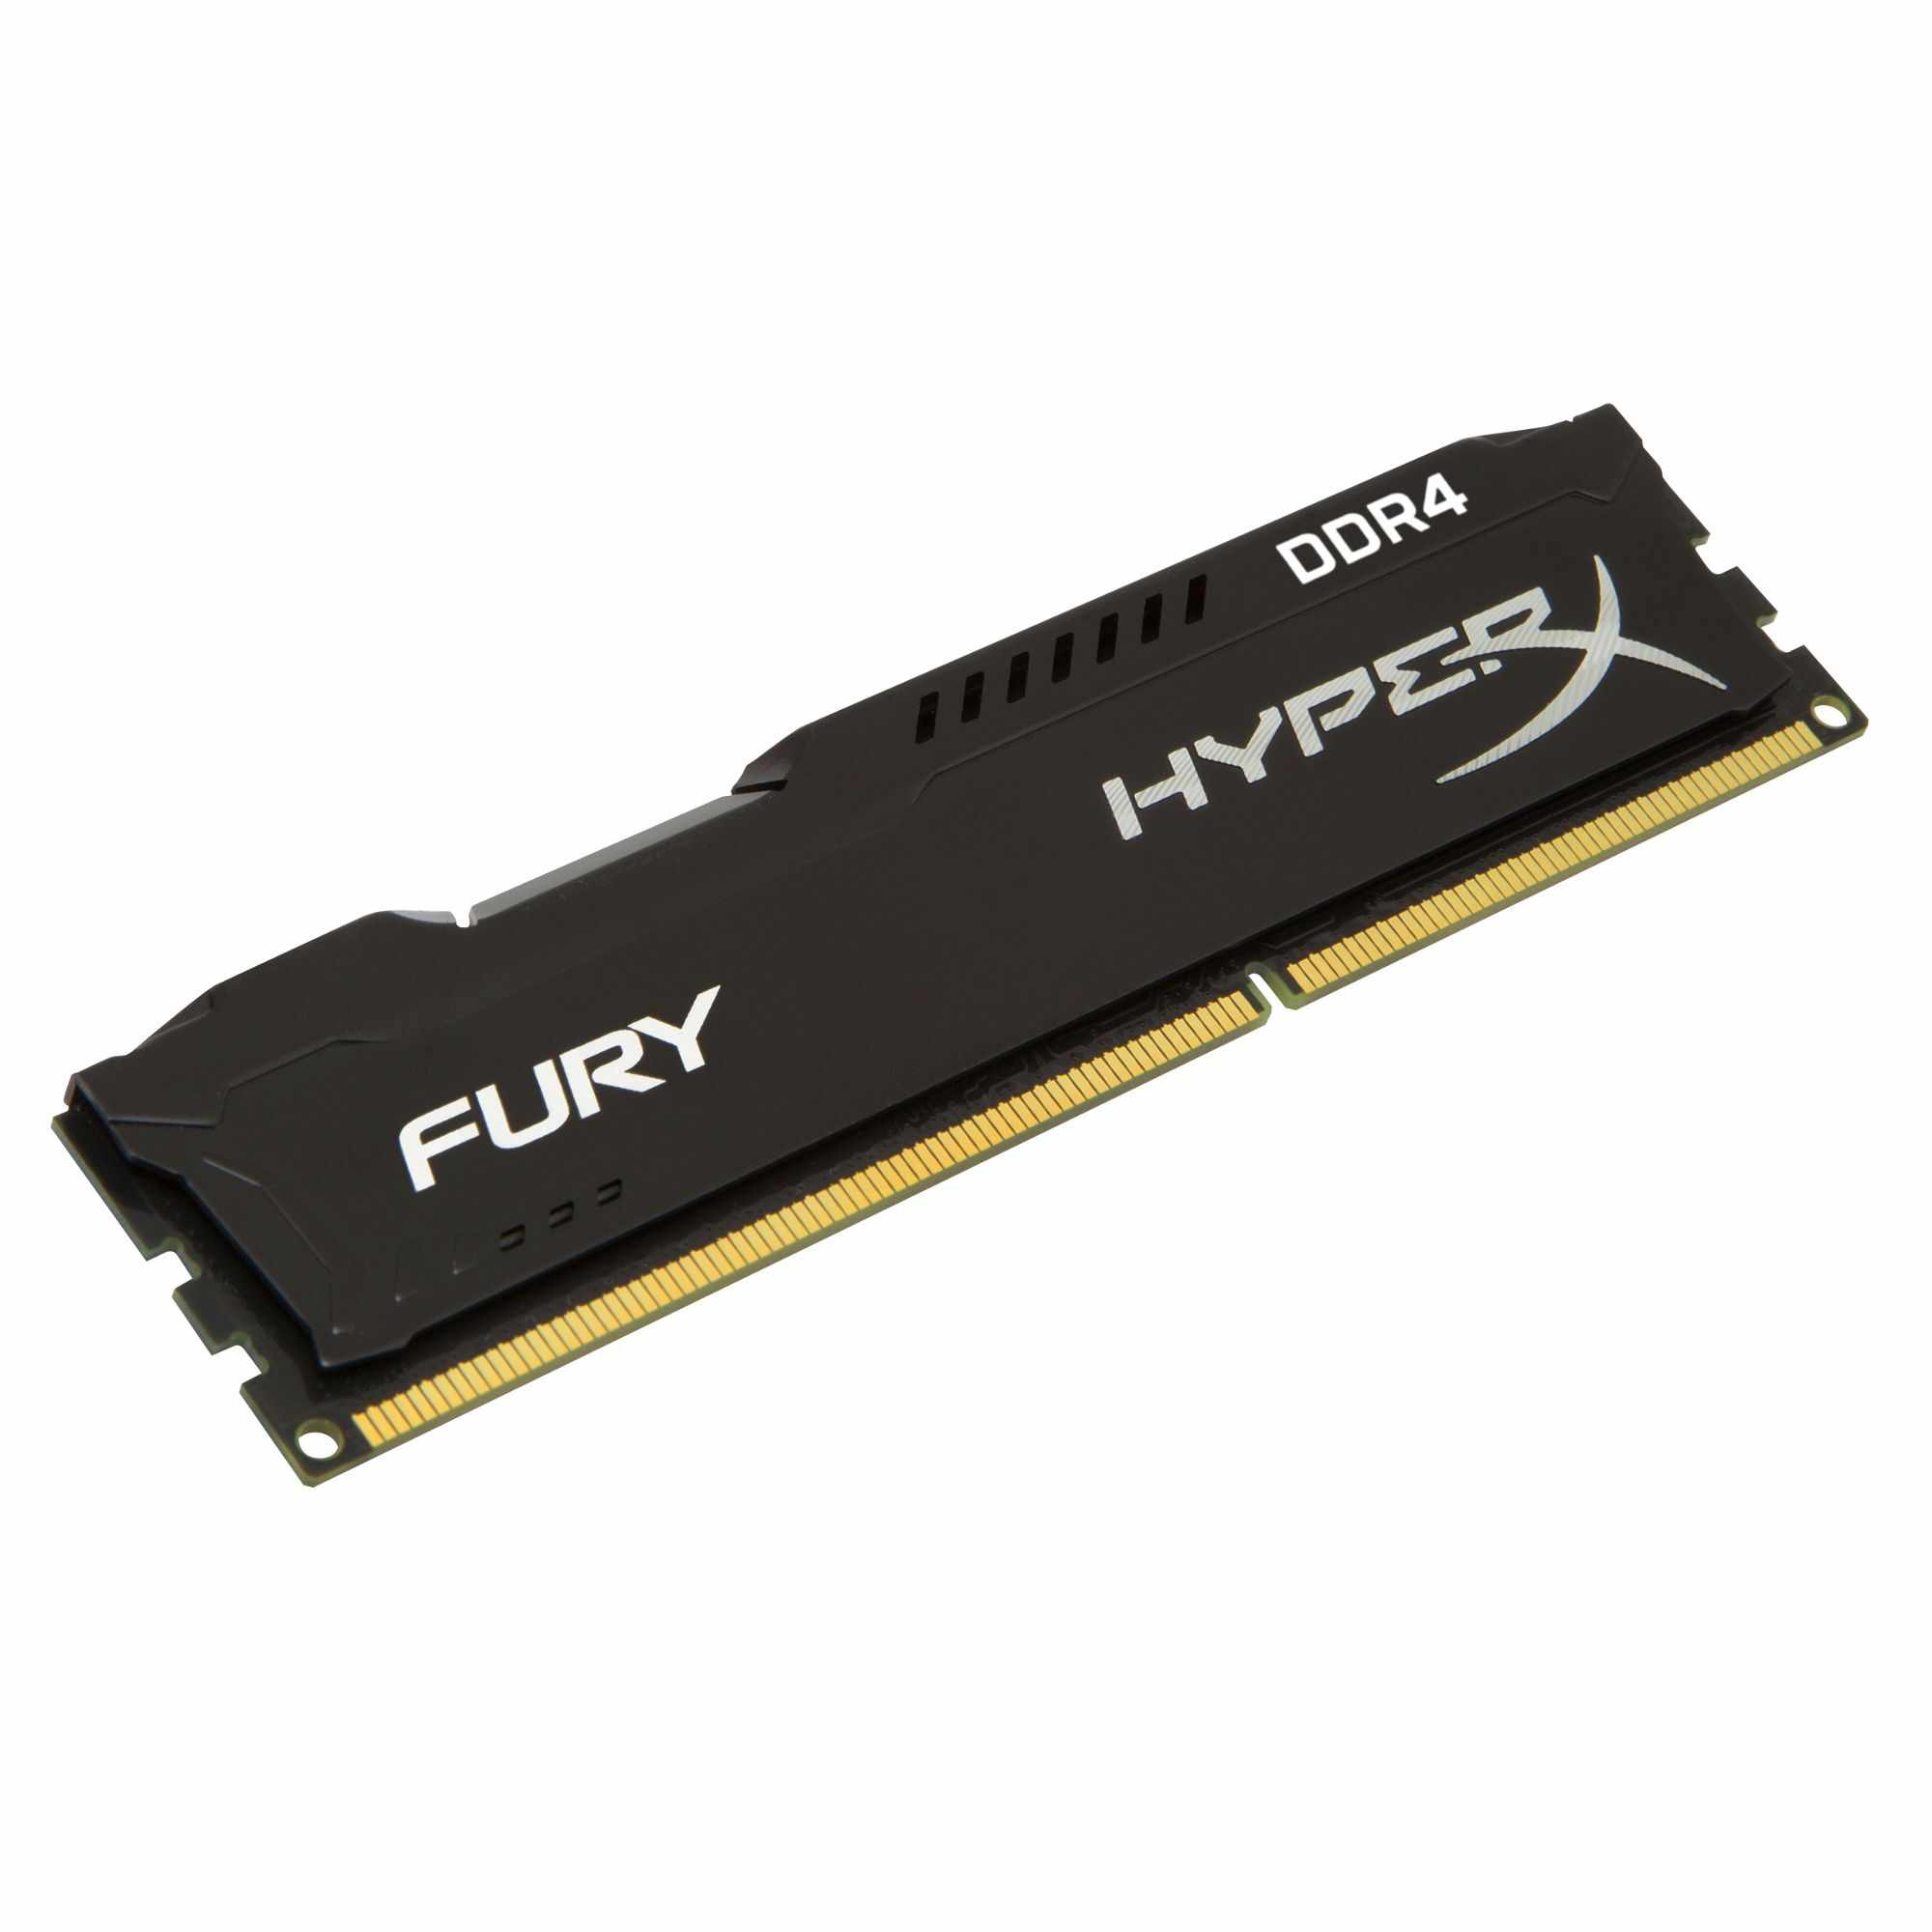 Memorie HyperX FURY, 4GB, DDR4, 2133MHz, CL14